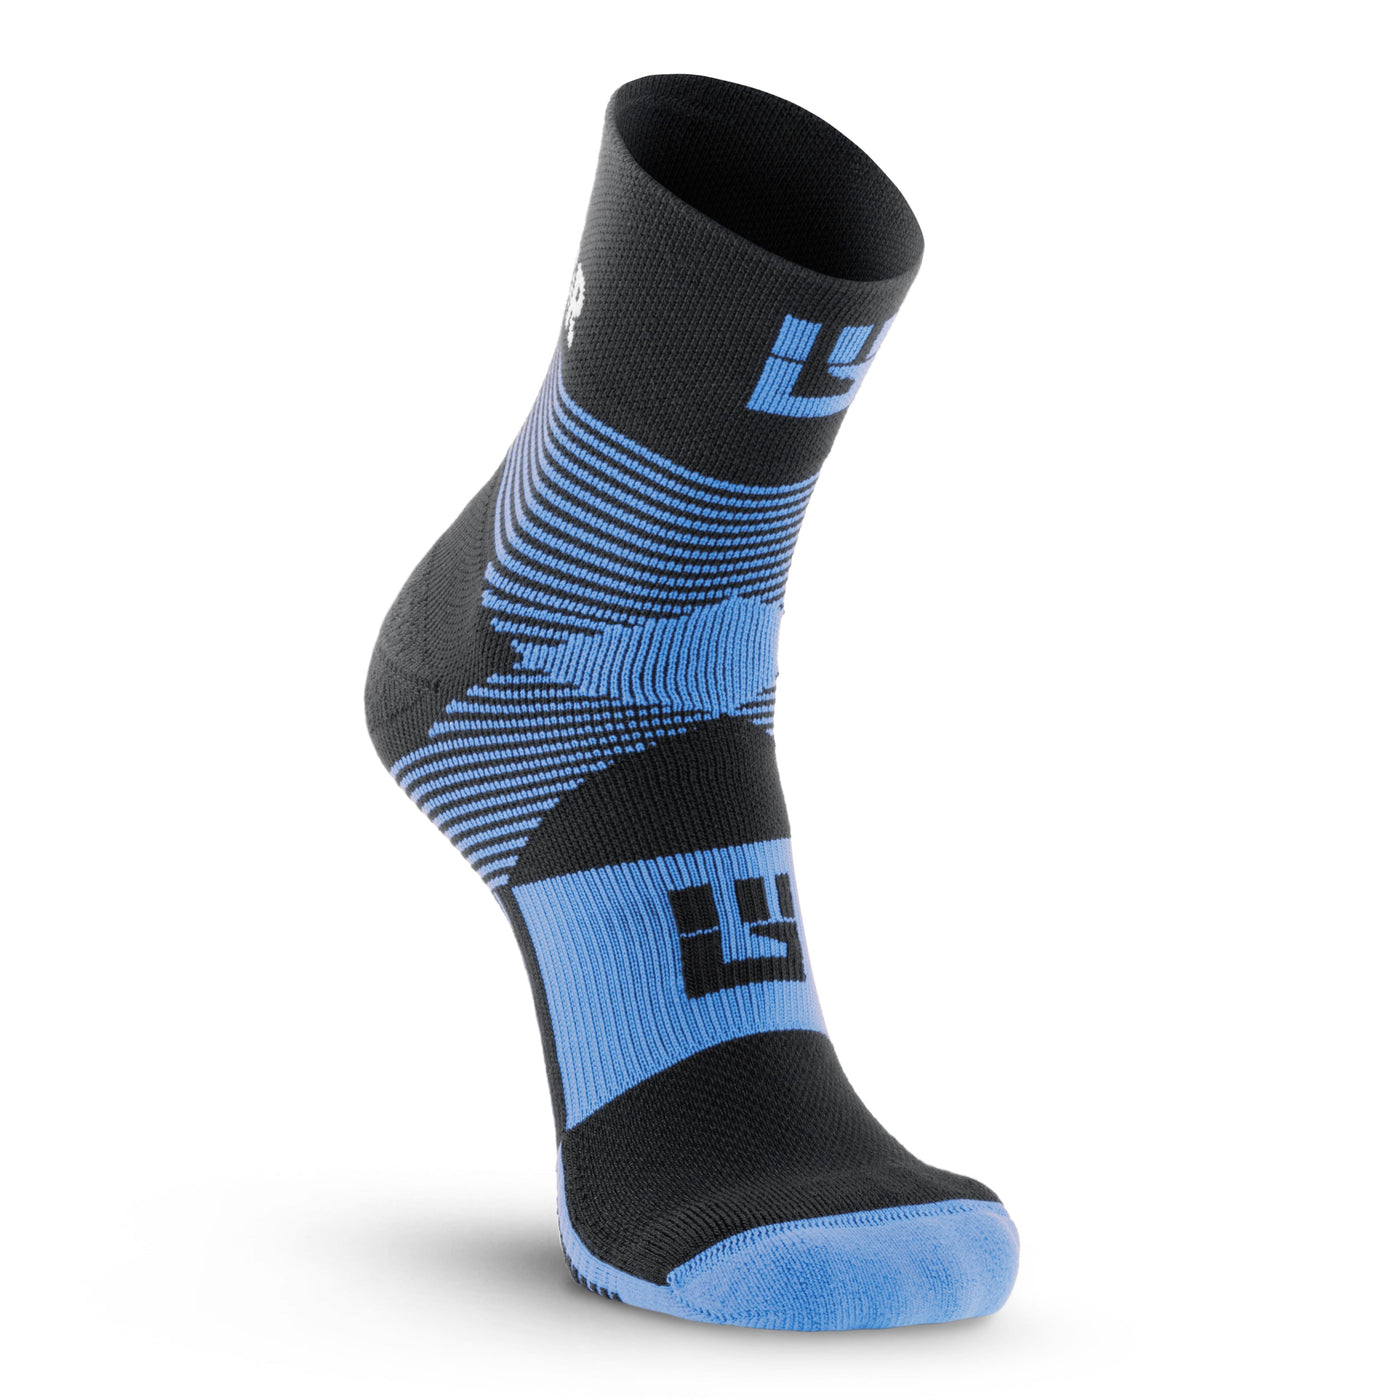 mudgear hybrid fitness socks blue